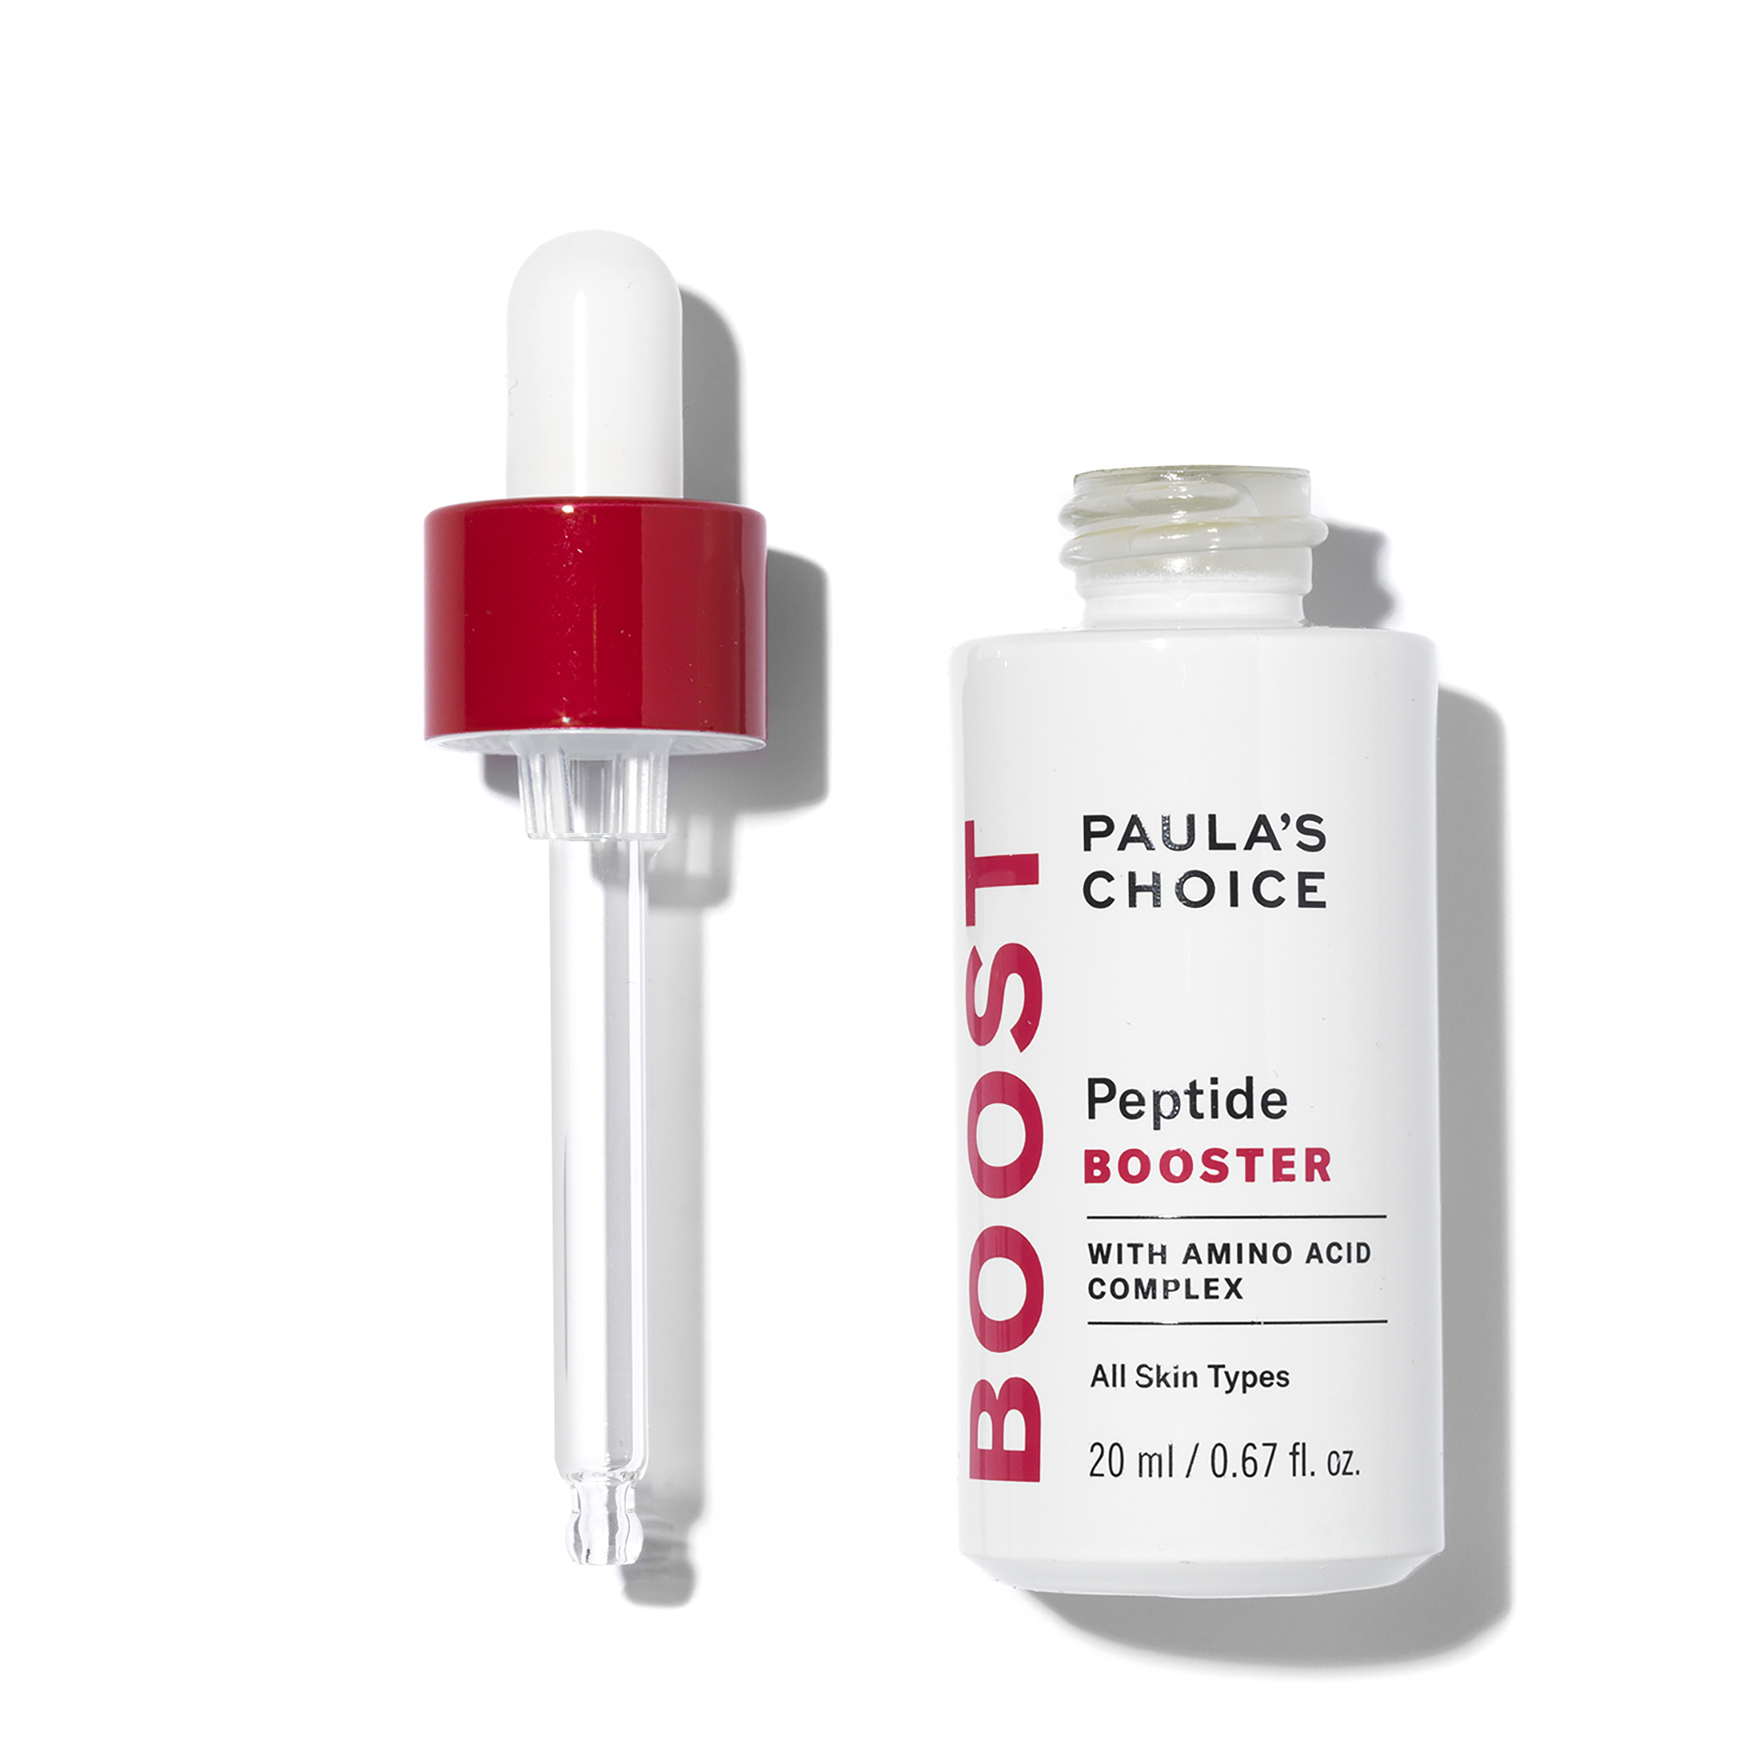 Paula's Choice Peptide | Space NK